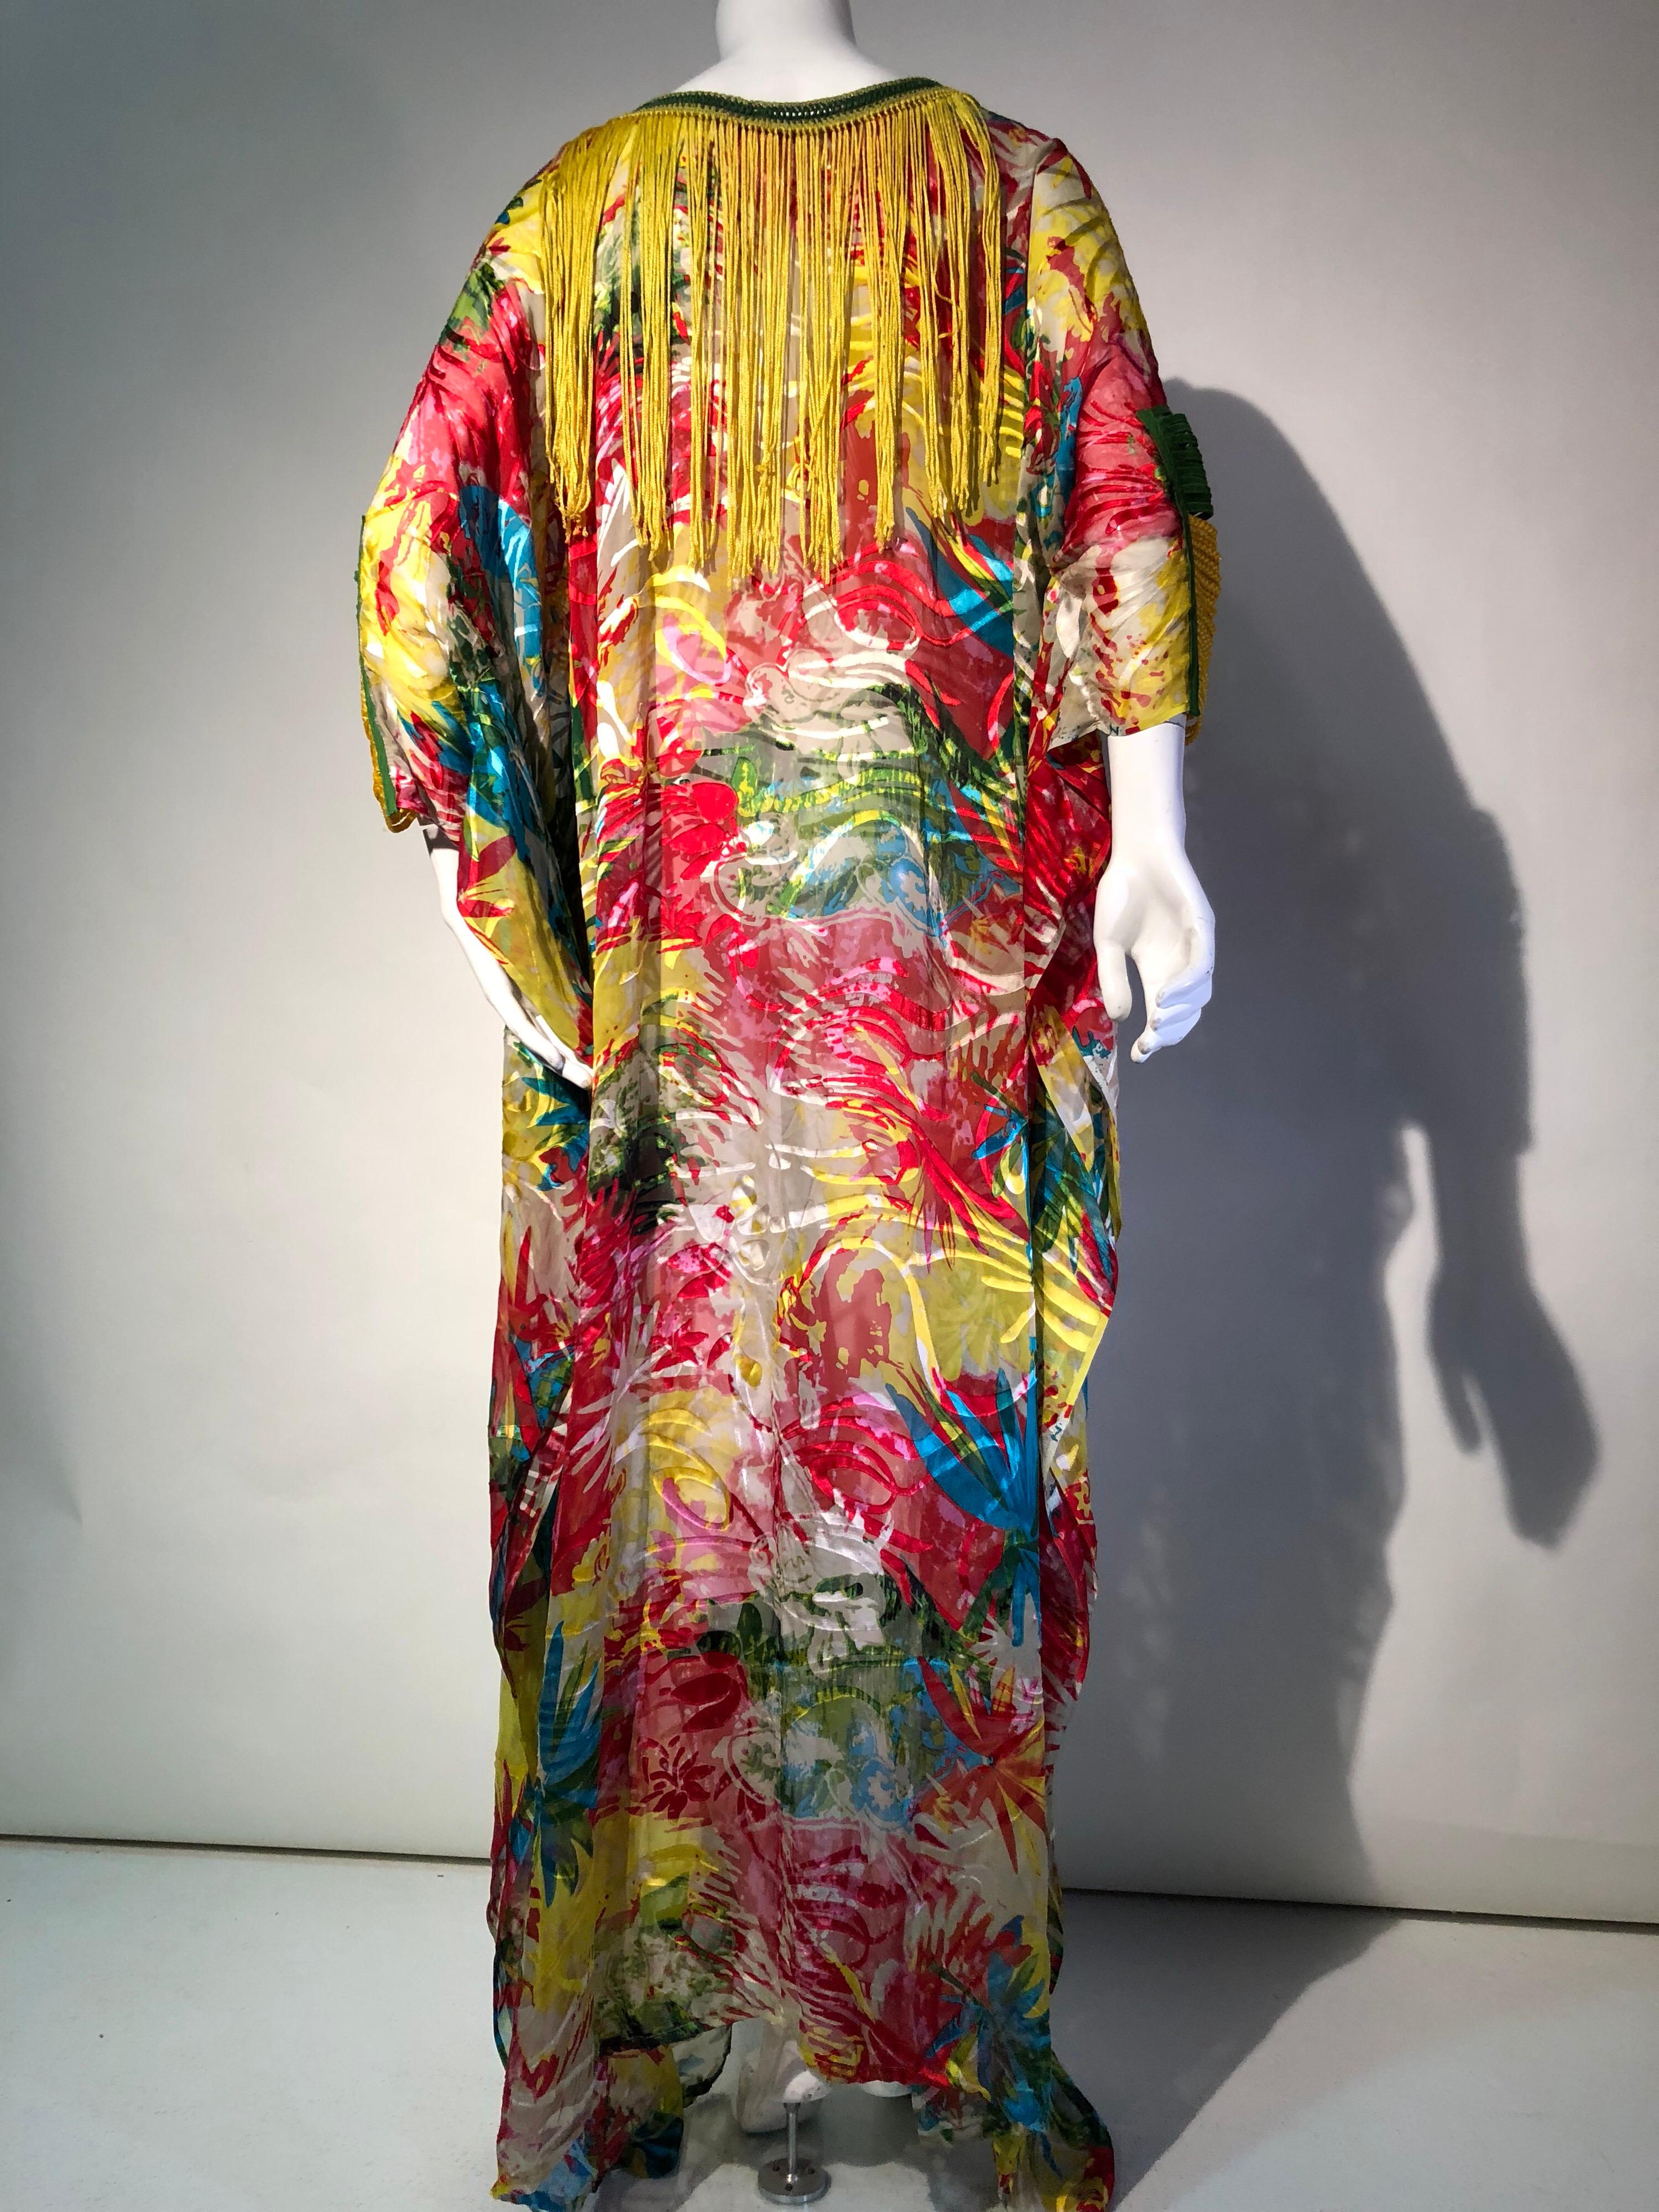 70s style kaftan dress